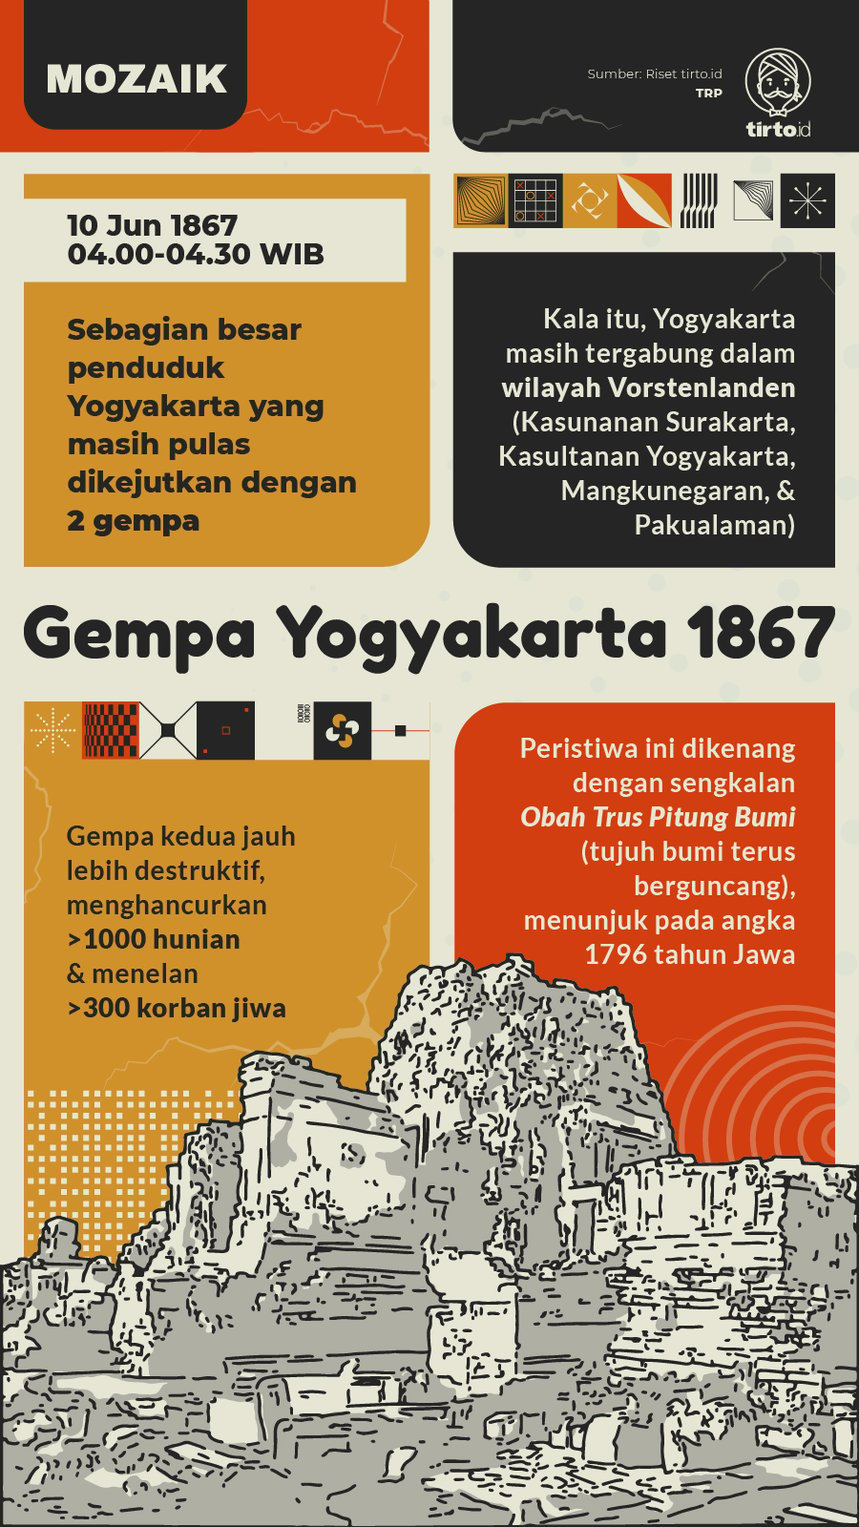 Infografik Mozaik Gempa Yoyakarta 1867